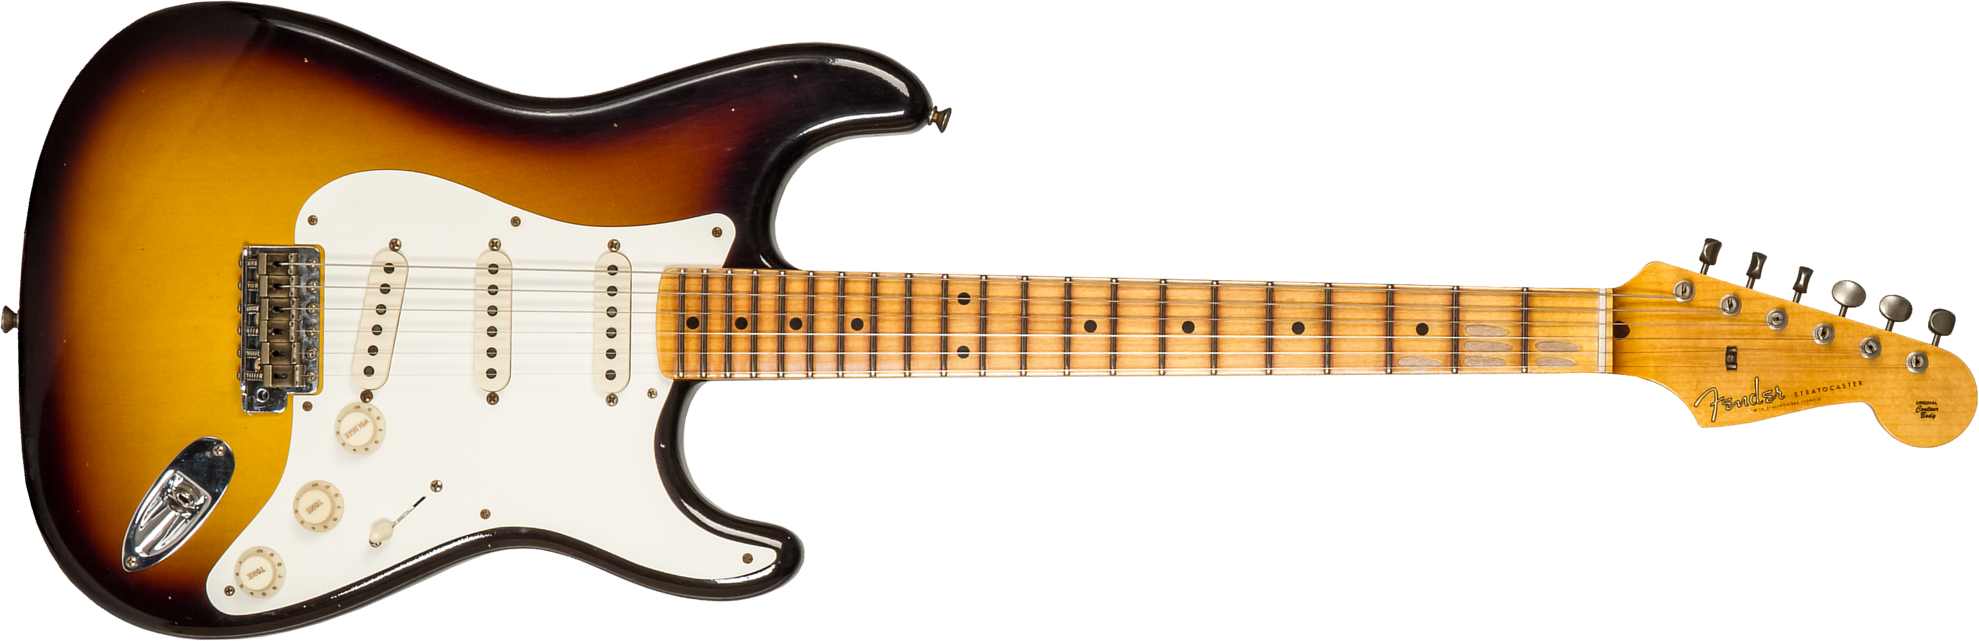 Fender Custom Shop Strat 1956 3s Trem Mn #cz575333 - Journeyman Relic 2-color Sunburst - E-Gitarre in Str-Form - Main picture